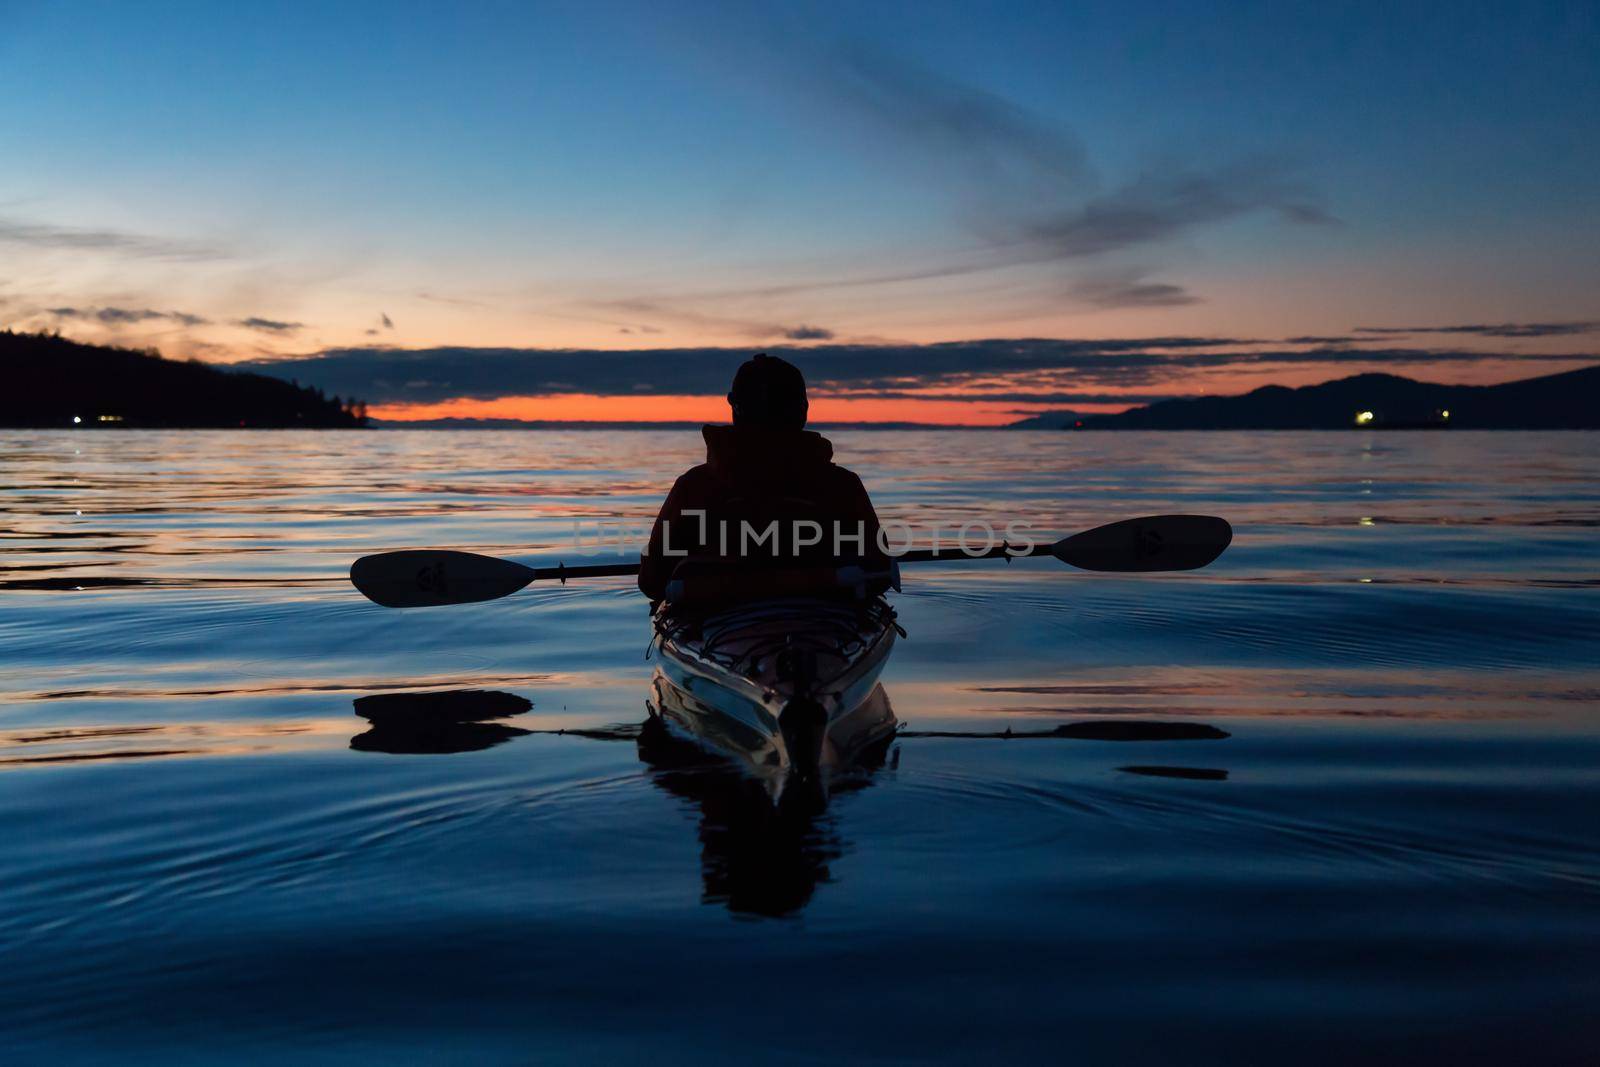 Man Kayaking on a sea kayak during a vibrant sunset. Taken near Jericho Beach, Vancouver, British Columbia, Canada.